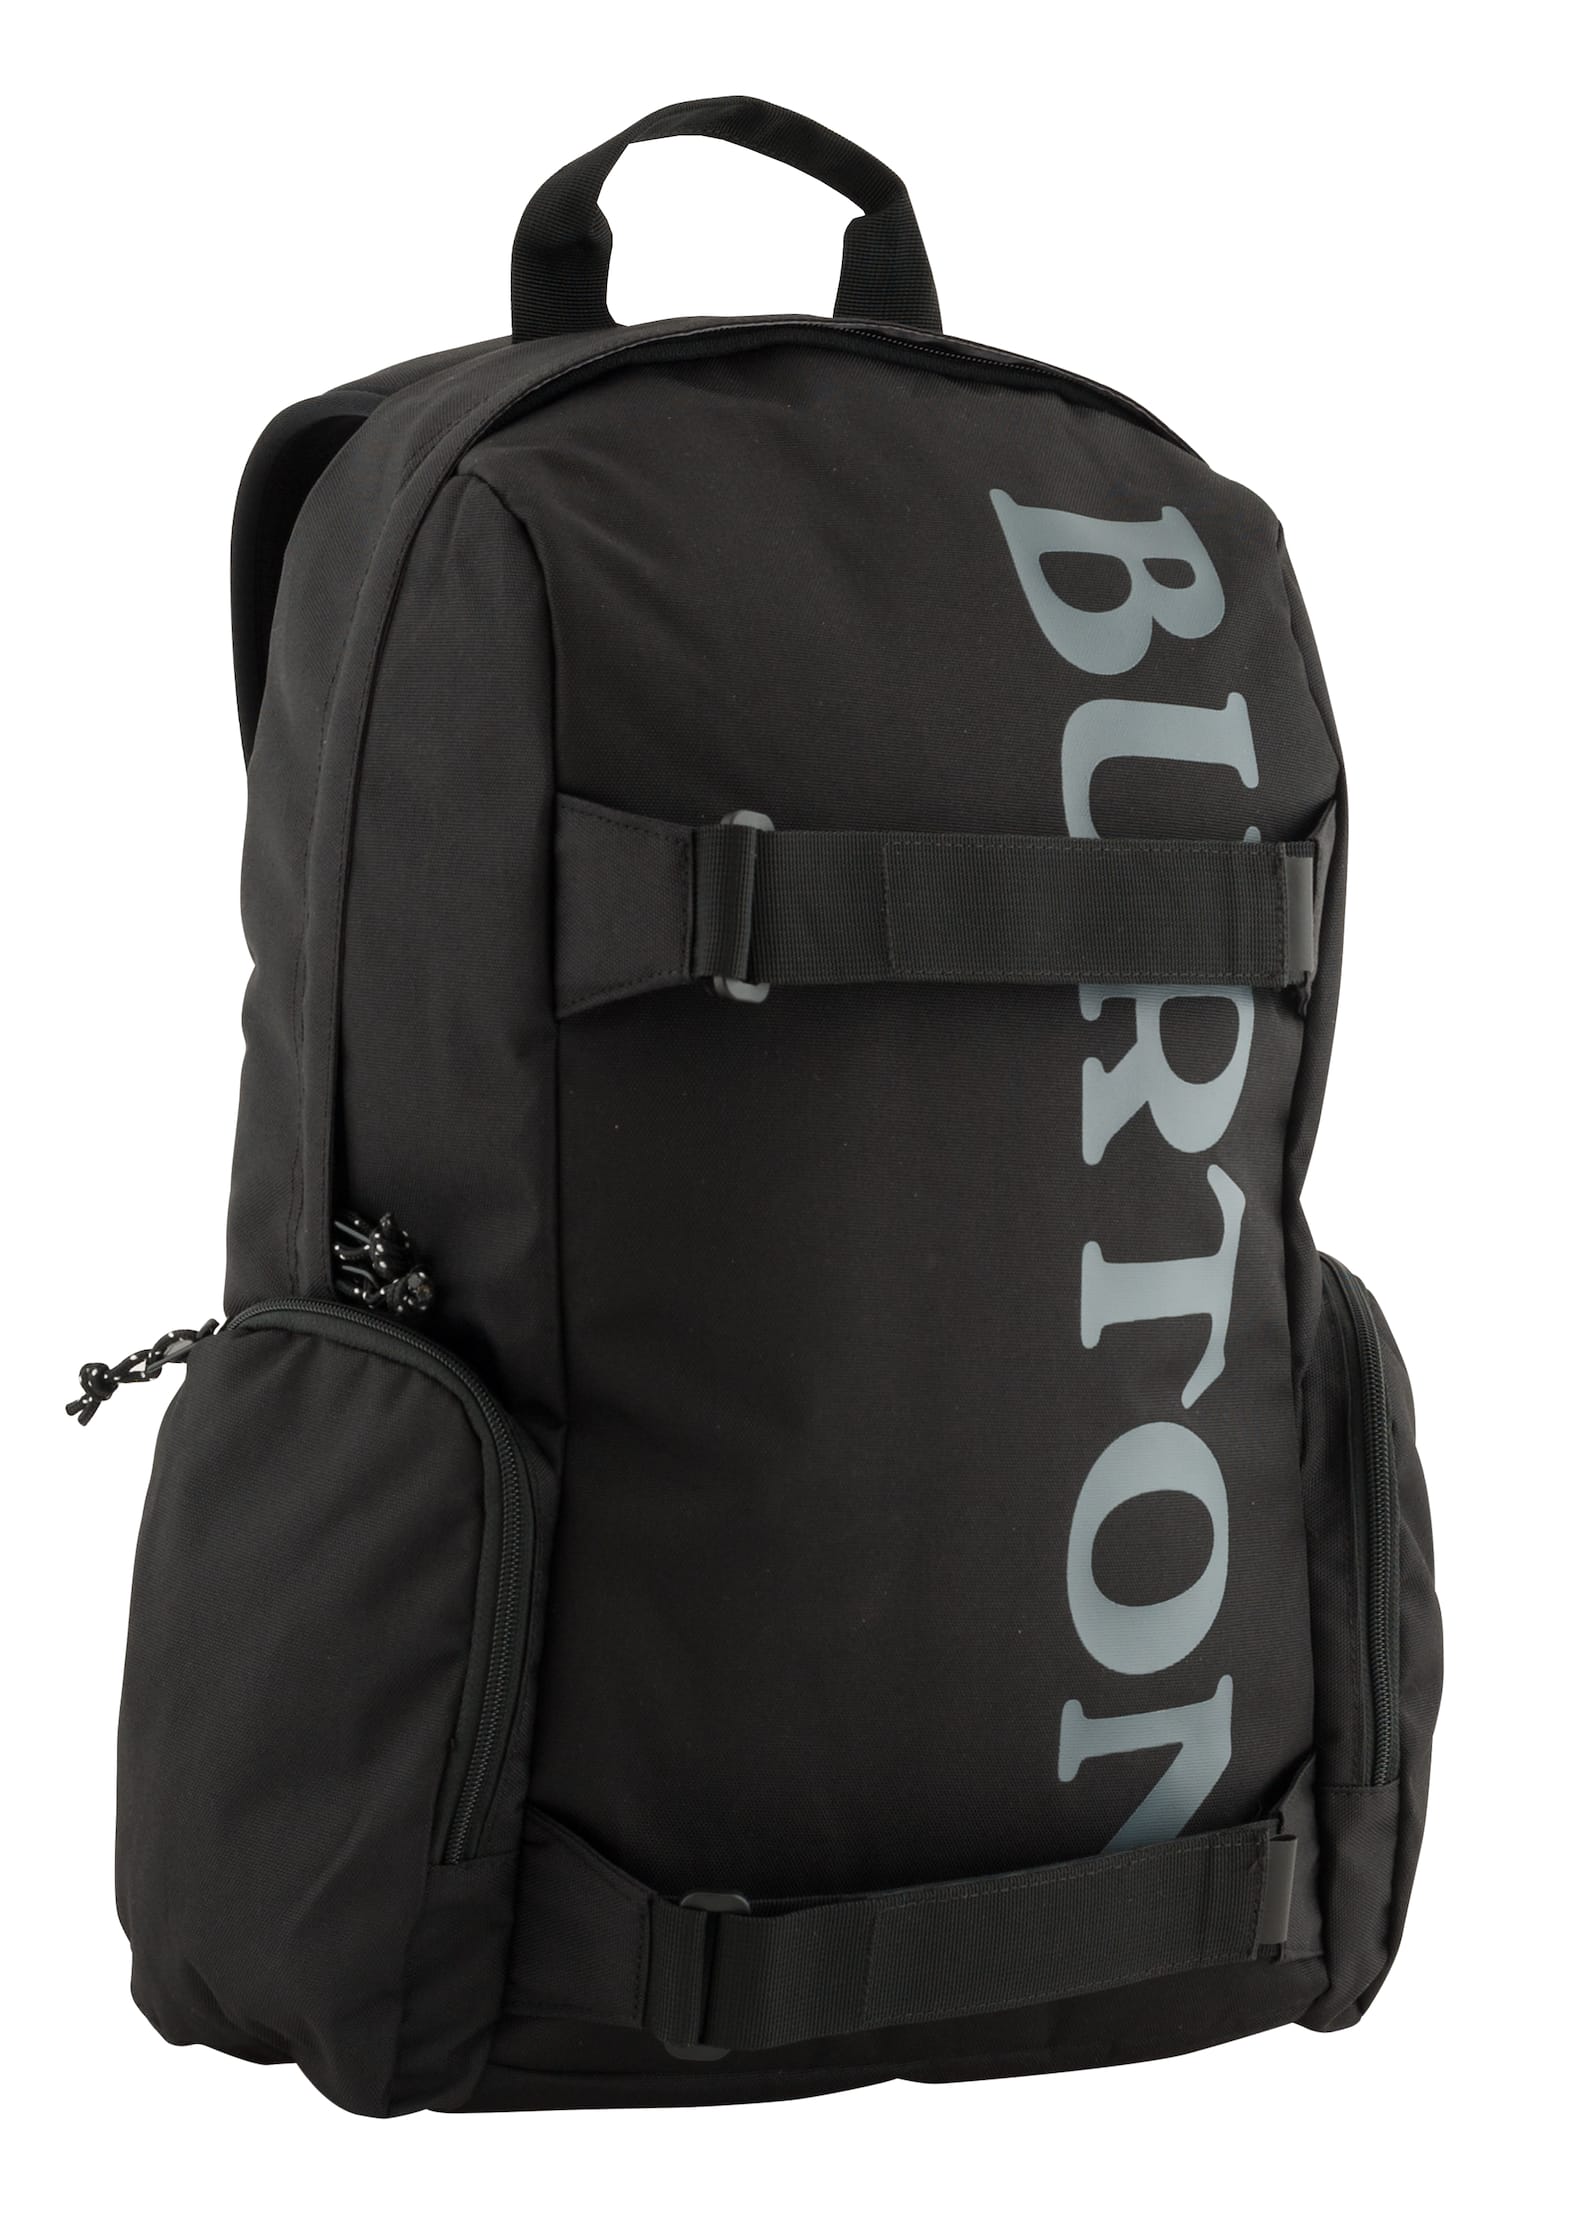 Burton Emphasis 26L Backpack | Burton.com Spring 2020 US